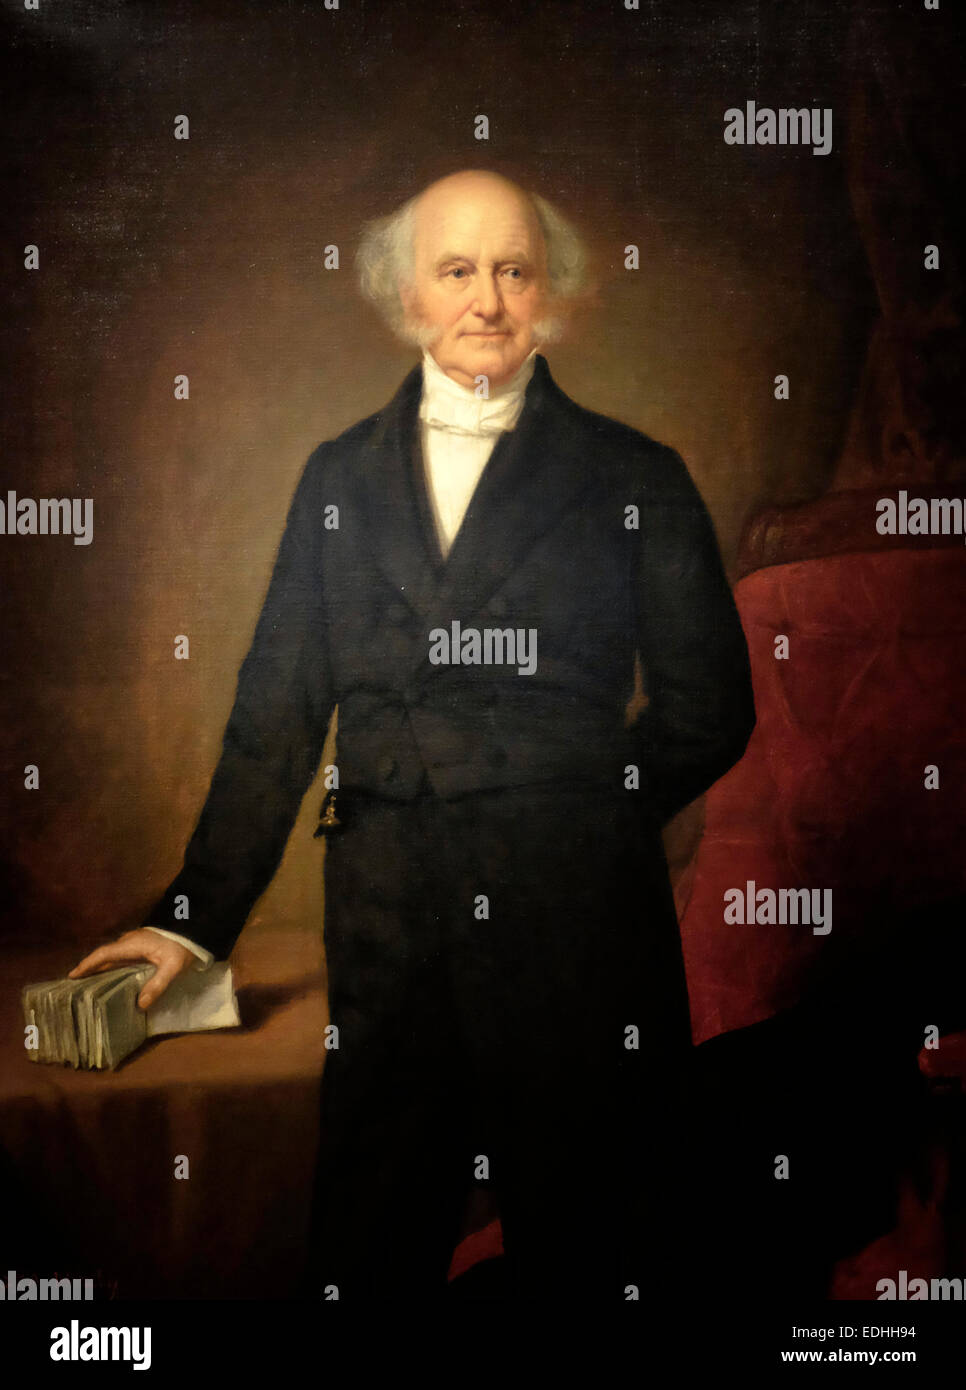 President Martin Van Buren - George P. A. Healy - 1864 Stock Photo